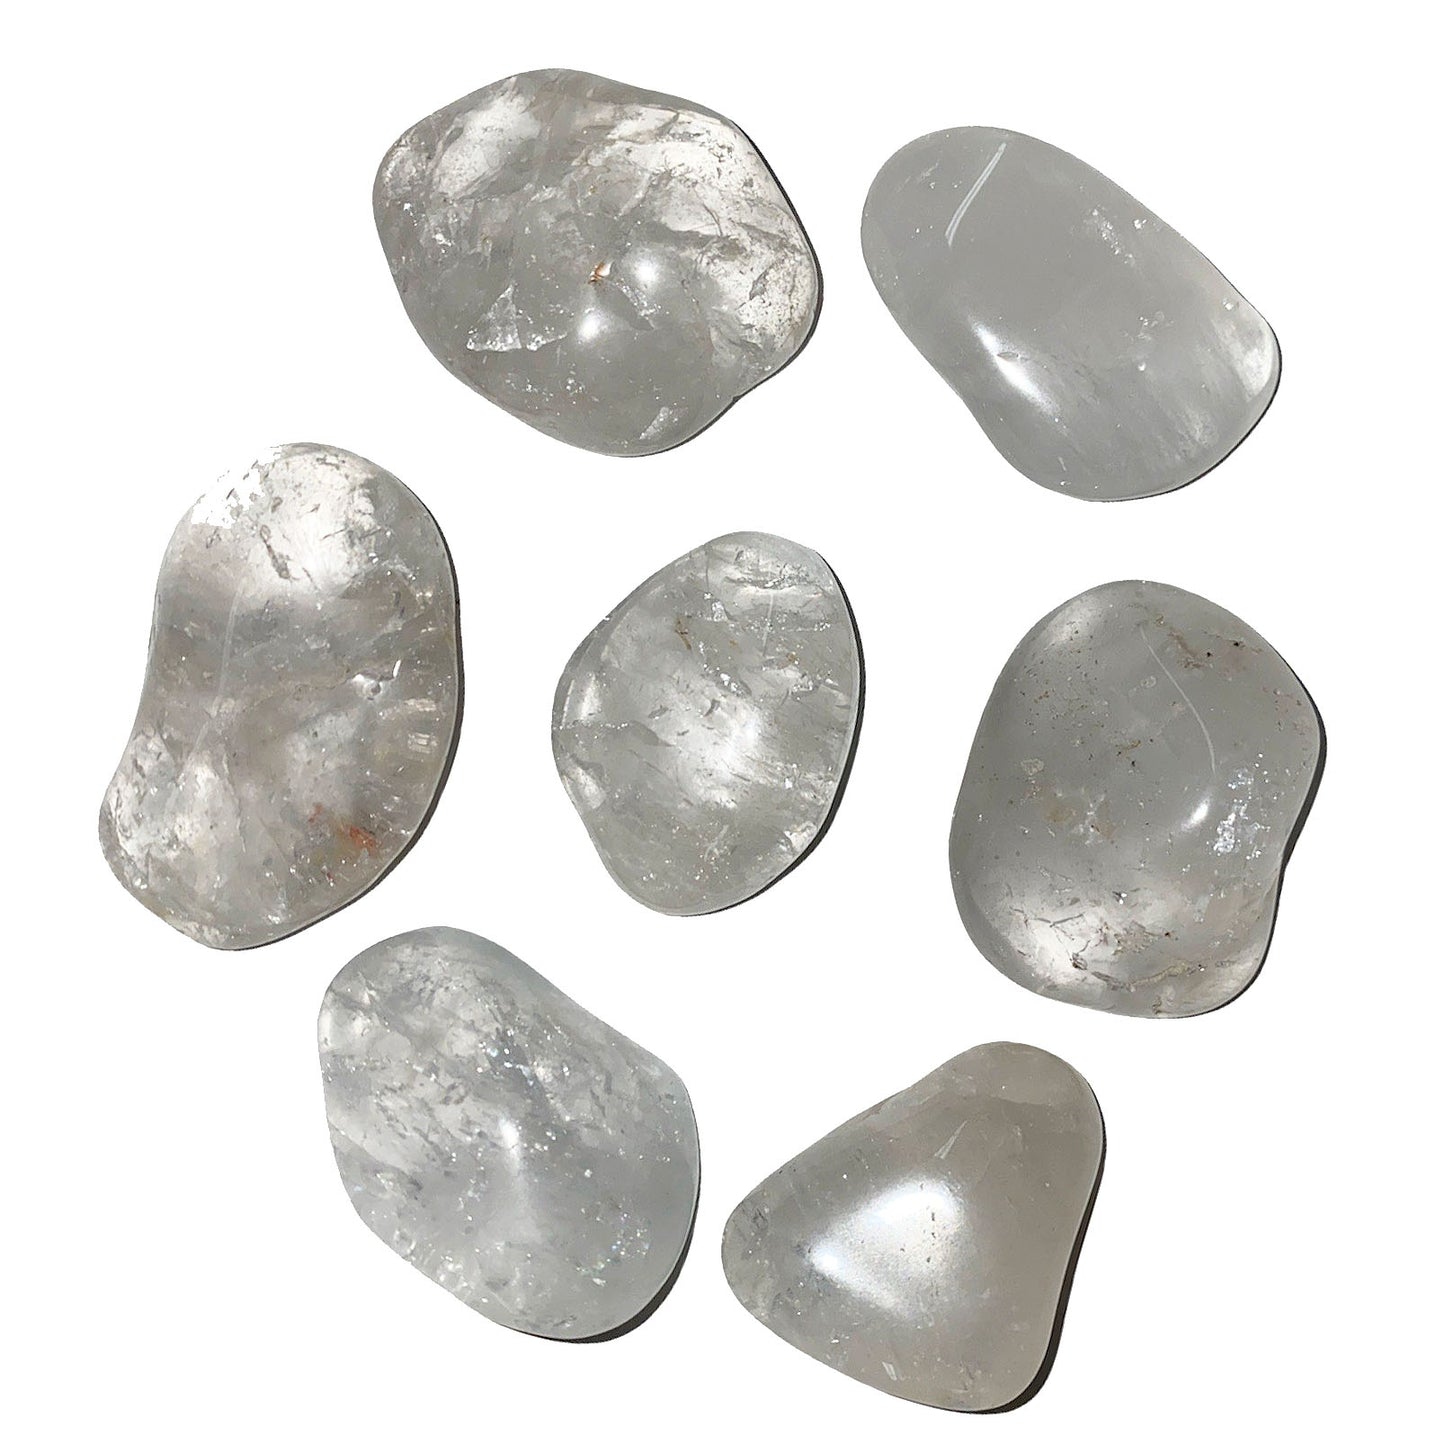 Clear Crystal Quartz Tumble Stones - 40 to 60mm - Q2A - Brazil - 1LB NEW122